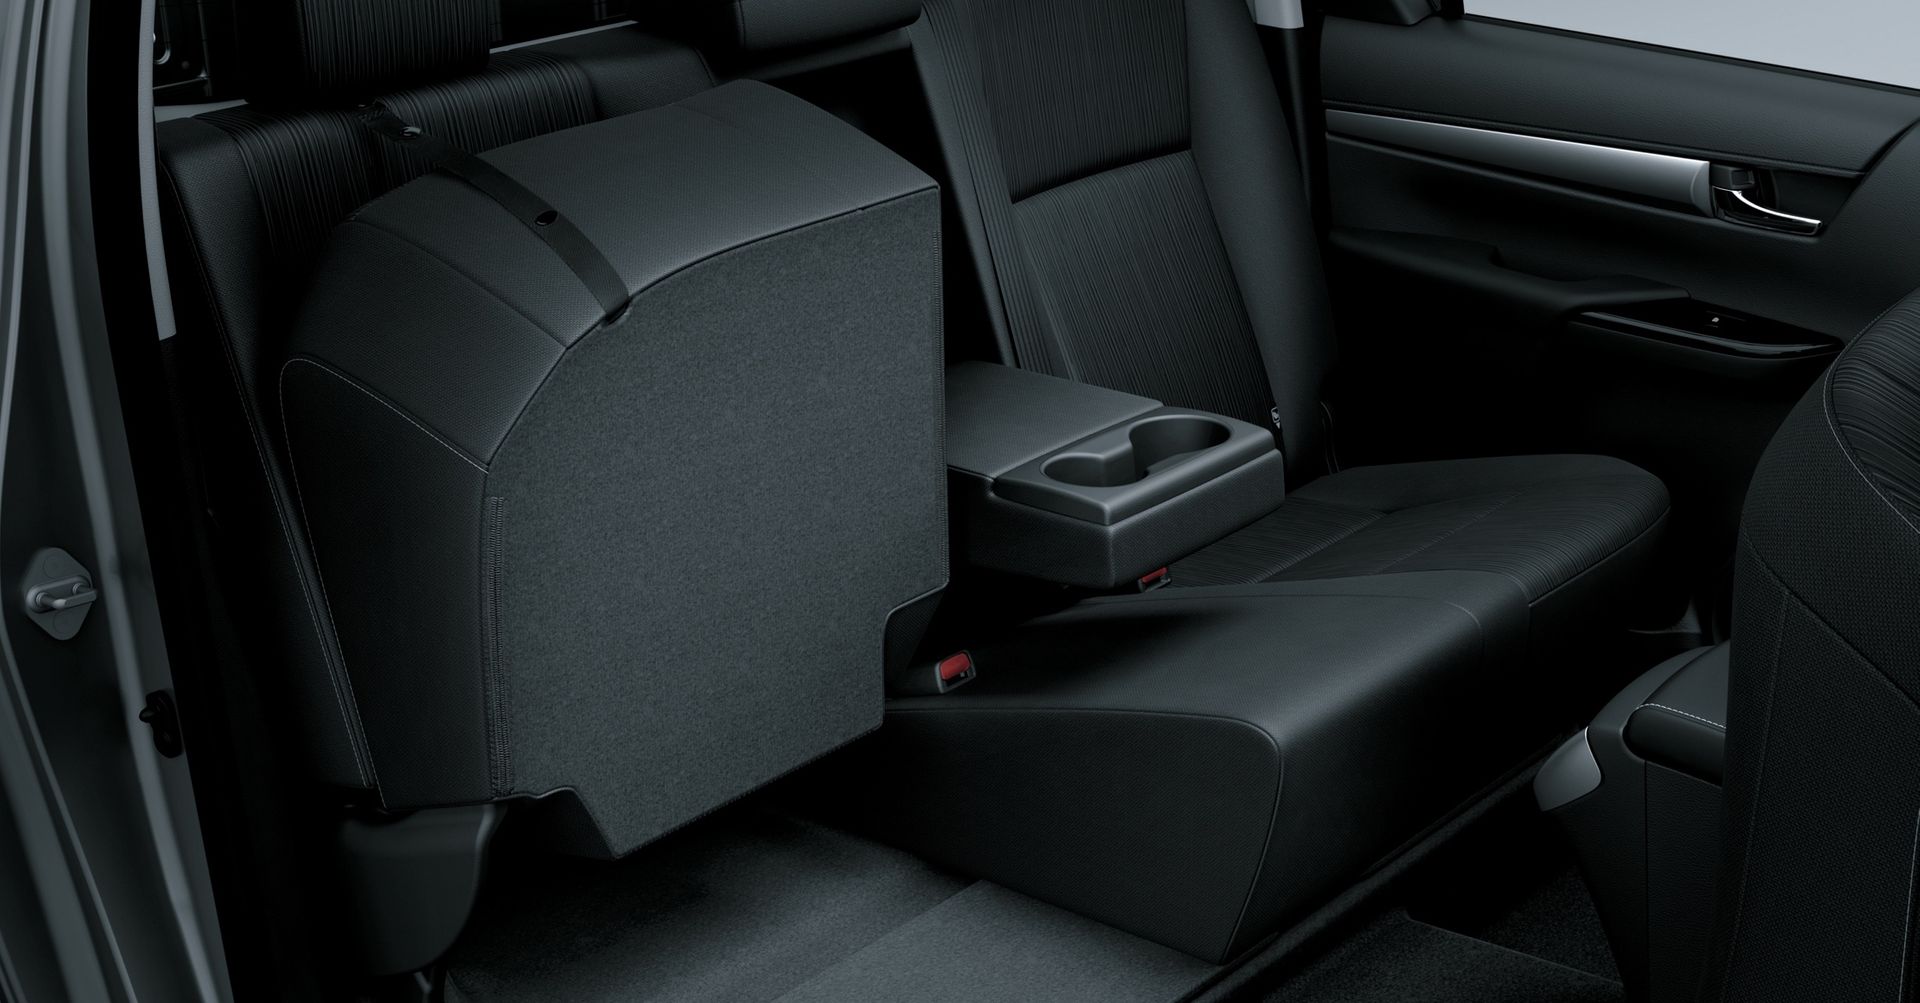 Toyota Hilux 2022 interior rear seats